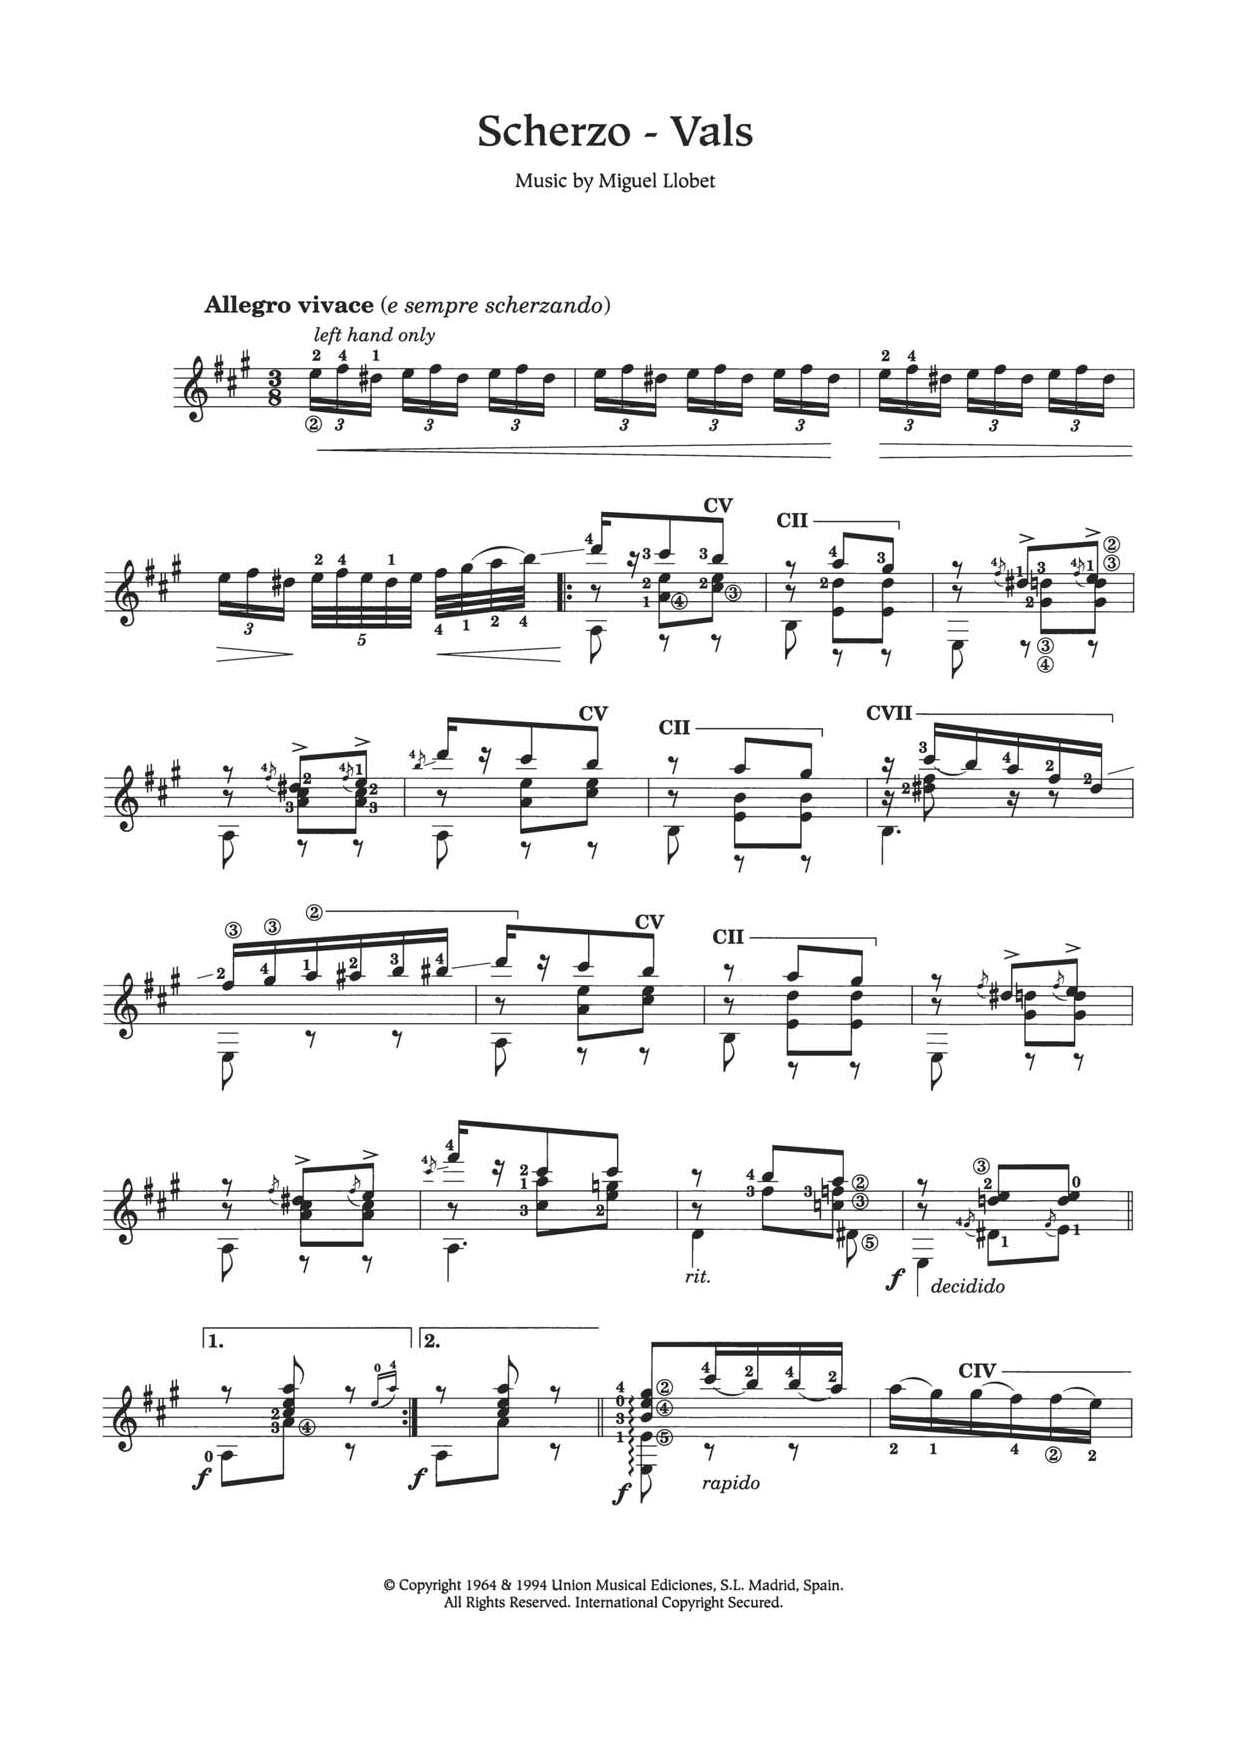 Miguel Llobet Scherzo-Vals Sheet Music Notes & Chords for Guitar - Download or Print PDF